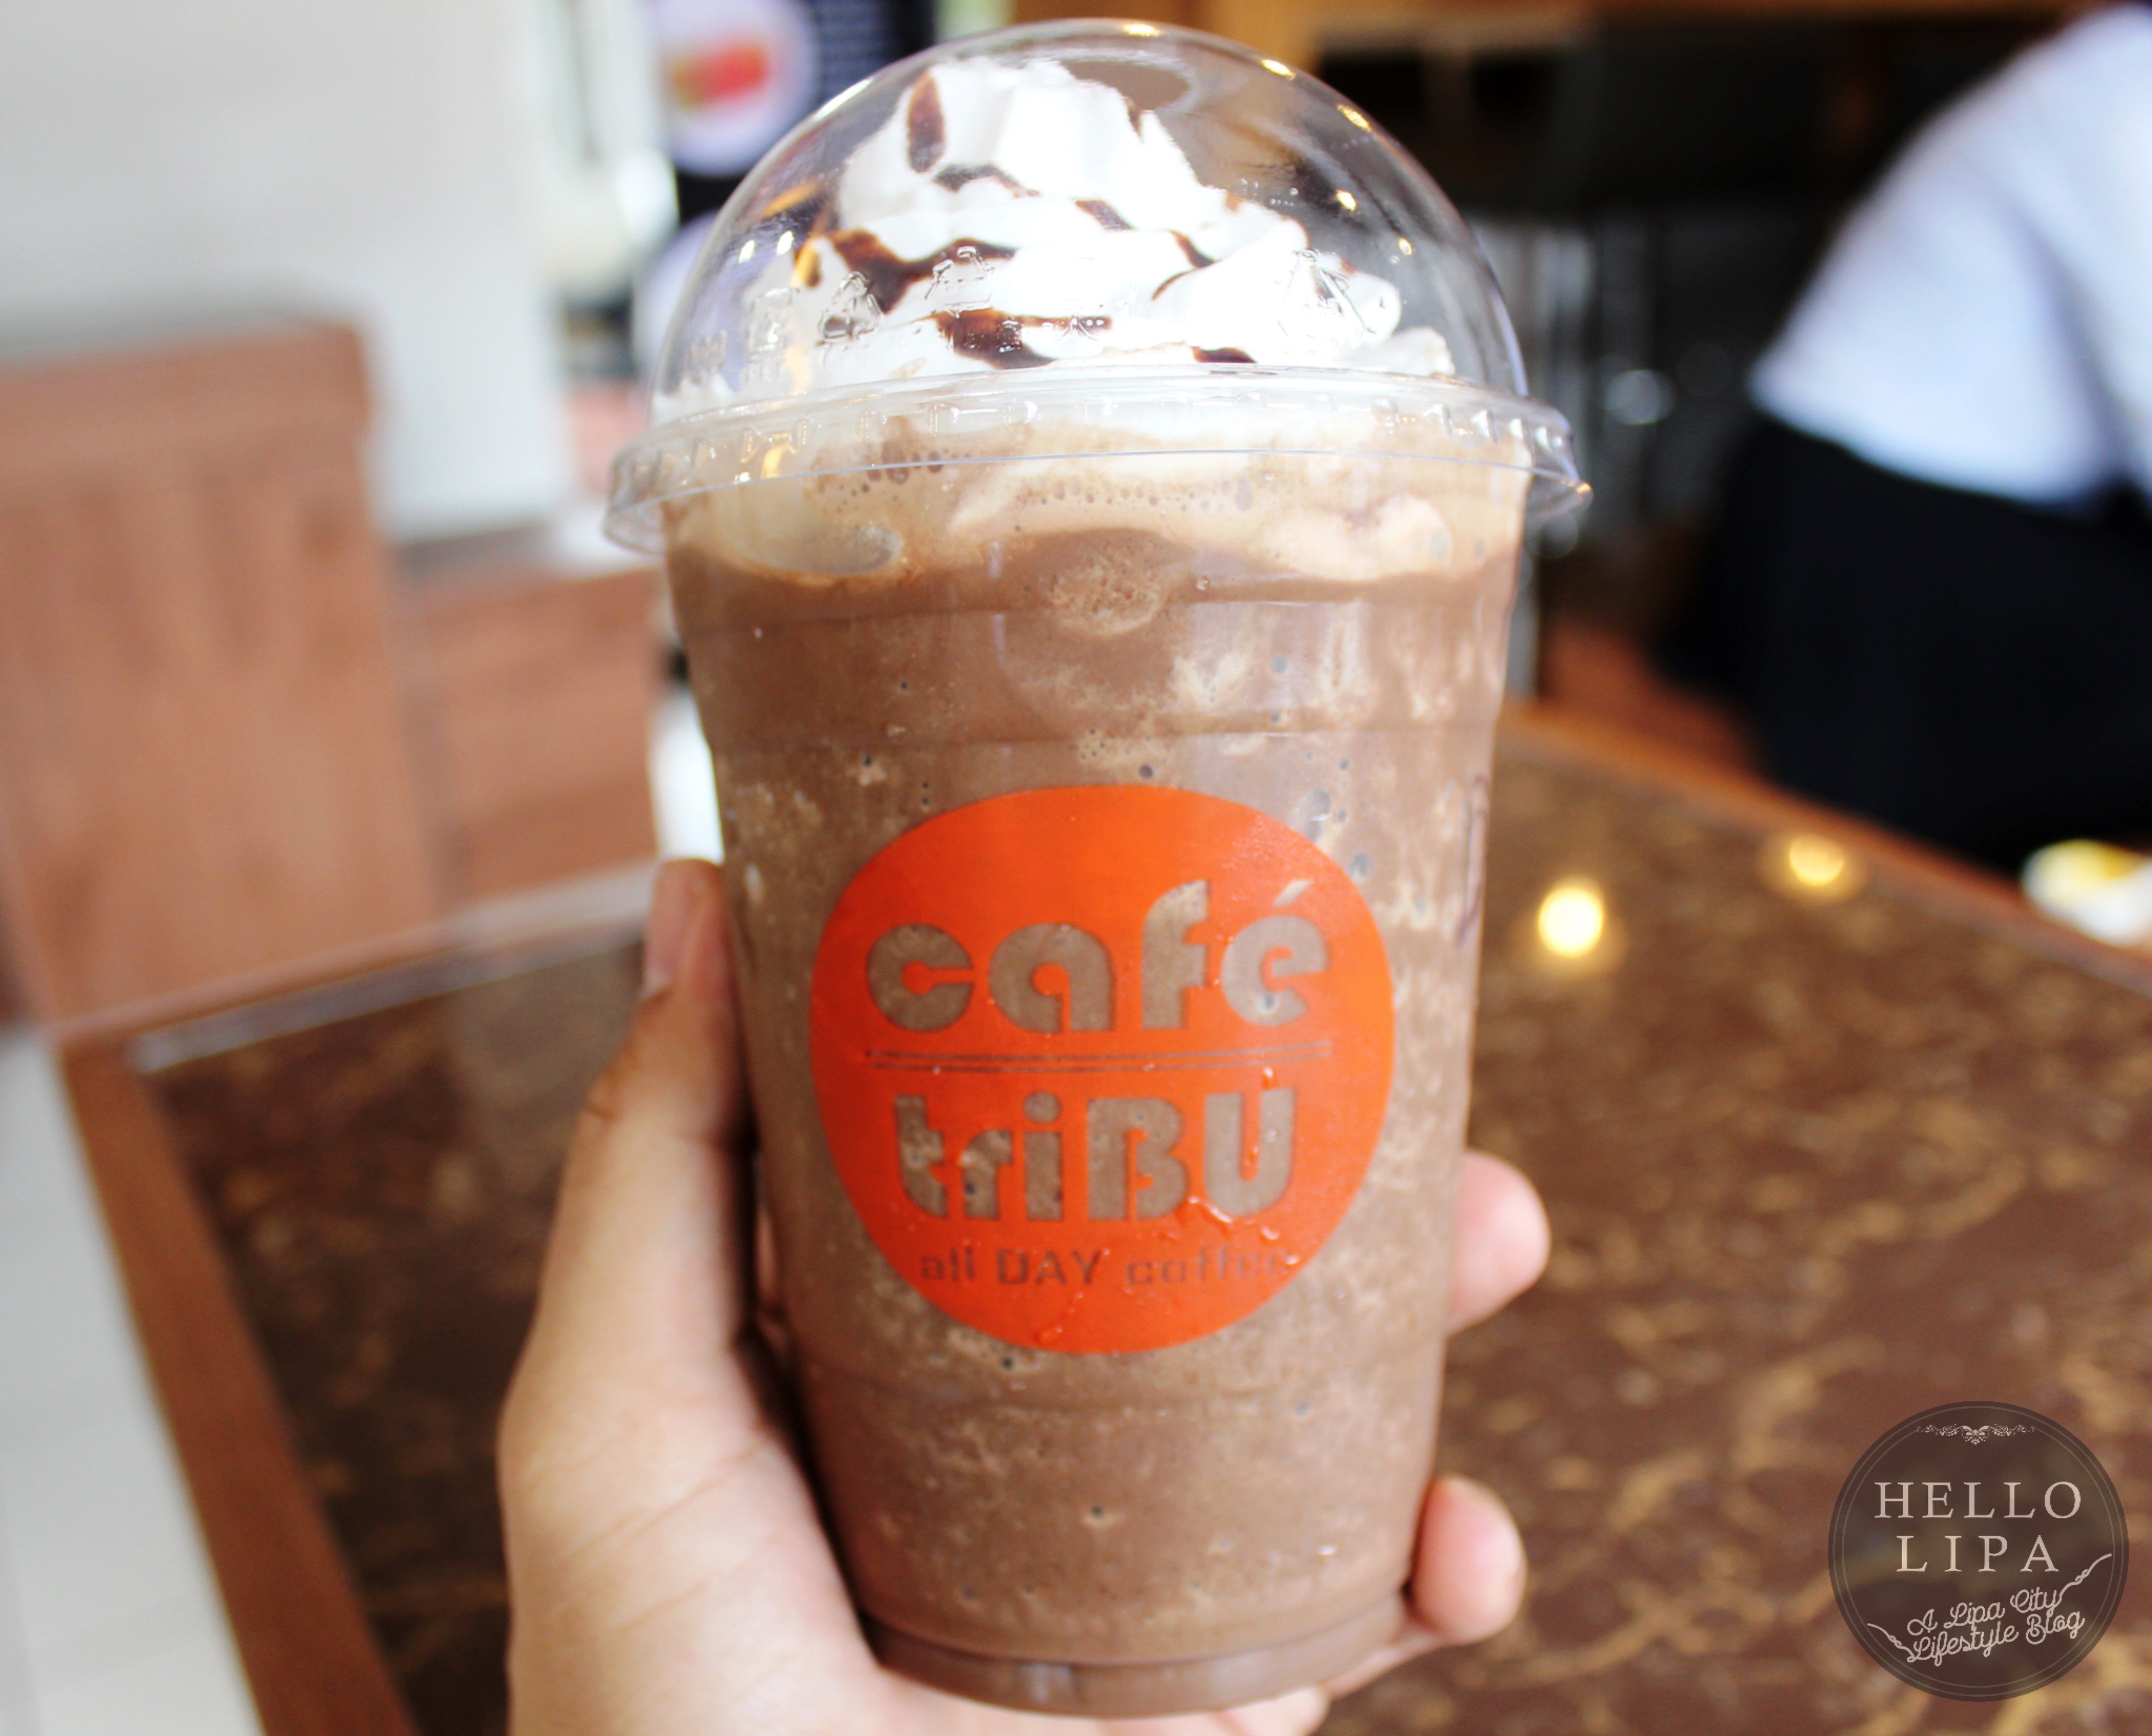 Café Tribu: Fast-rising Coffee Shop in Metro Manila Now in Lipa City!